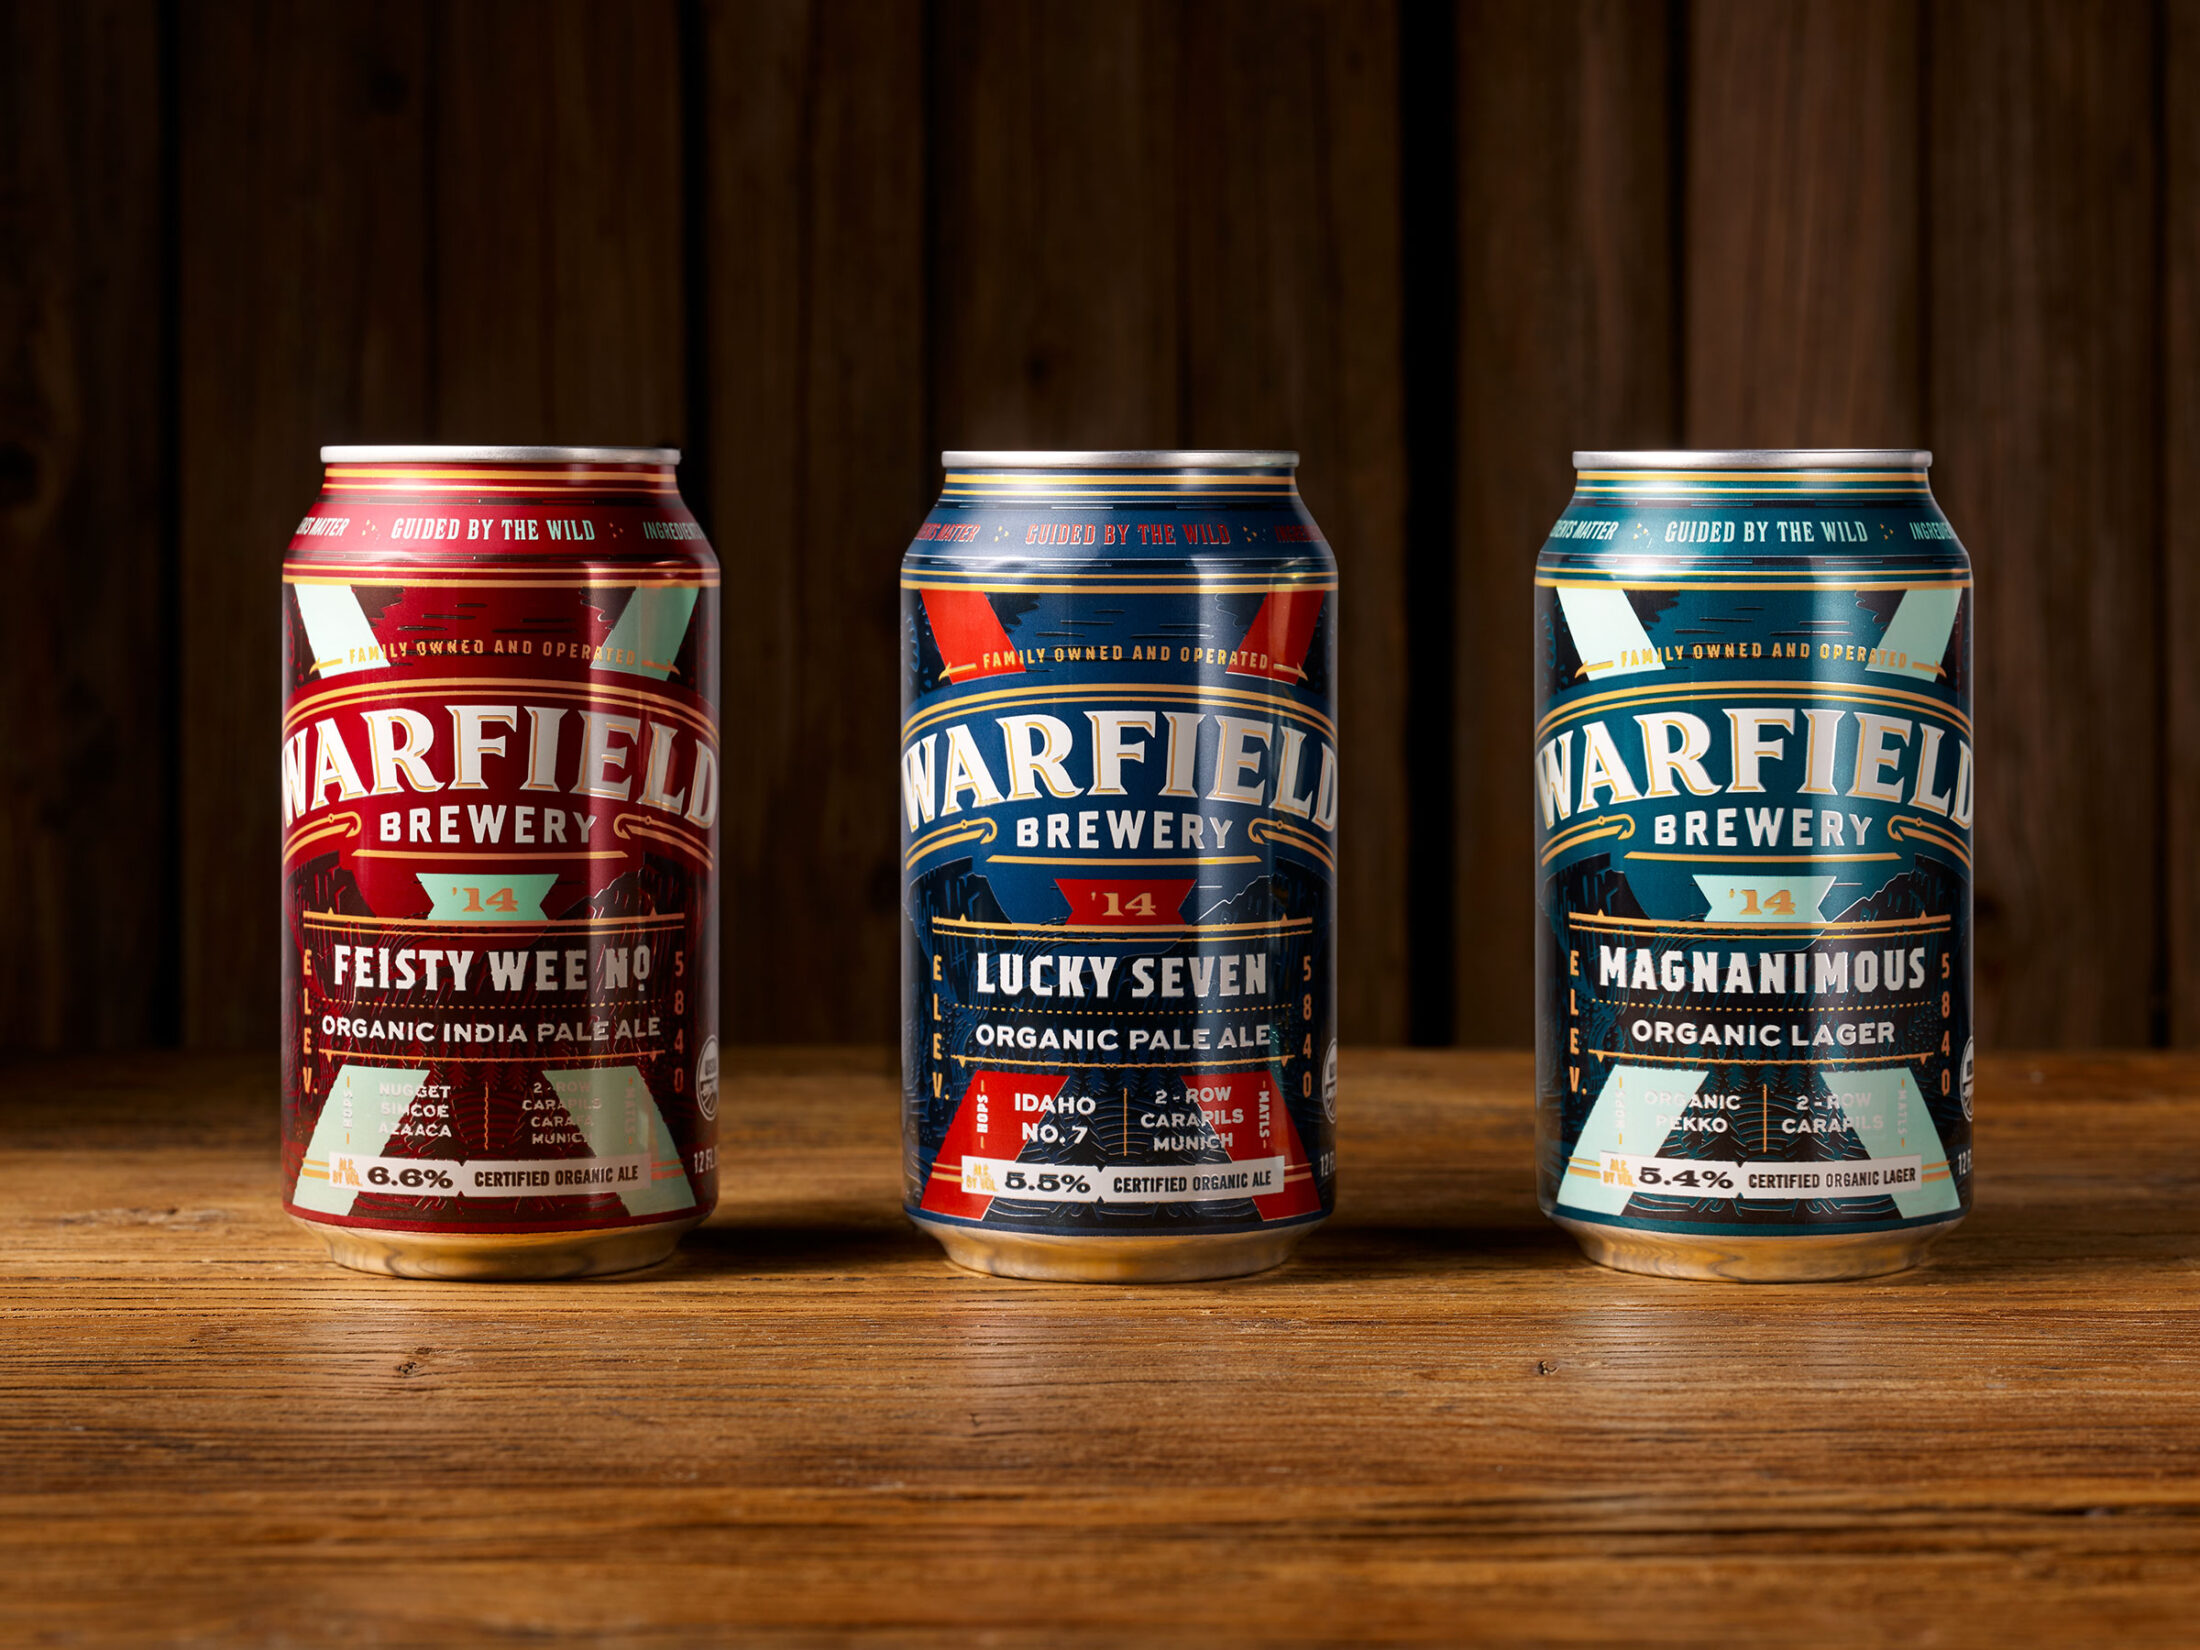 Warfield Brewing package design